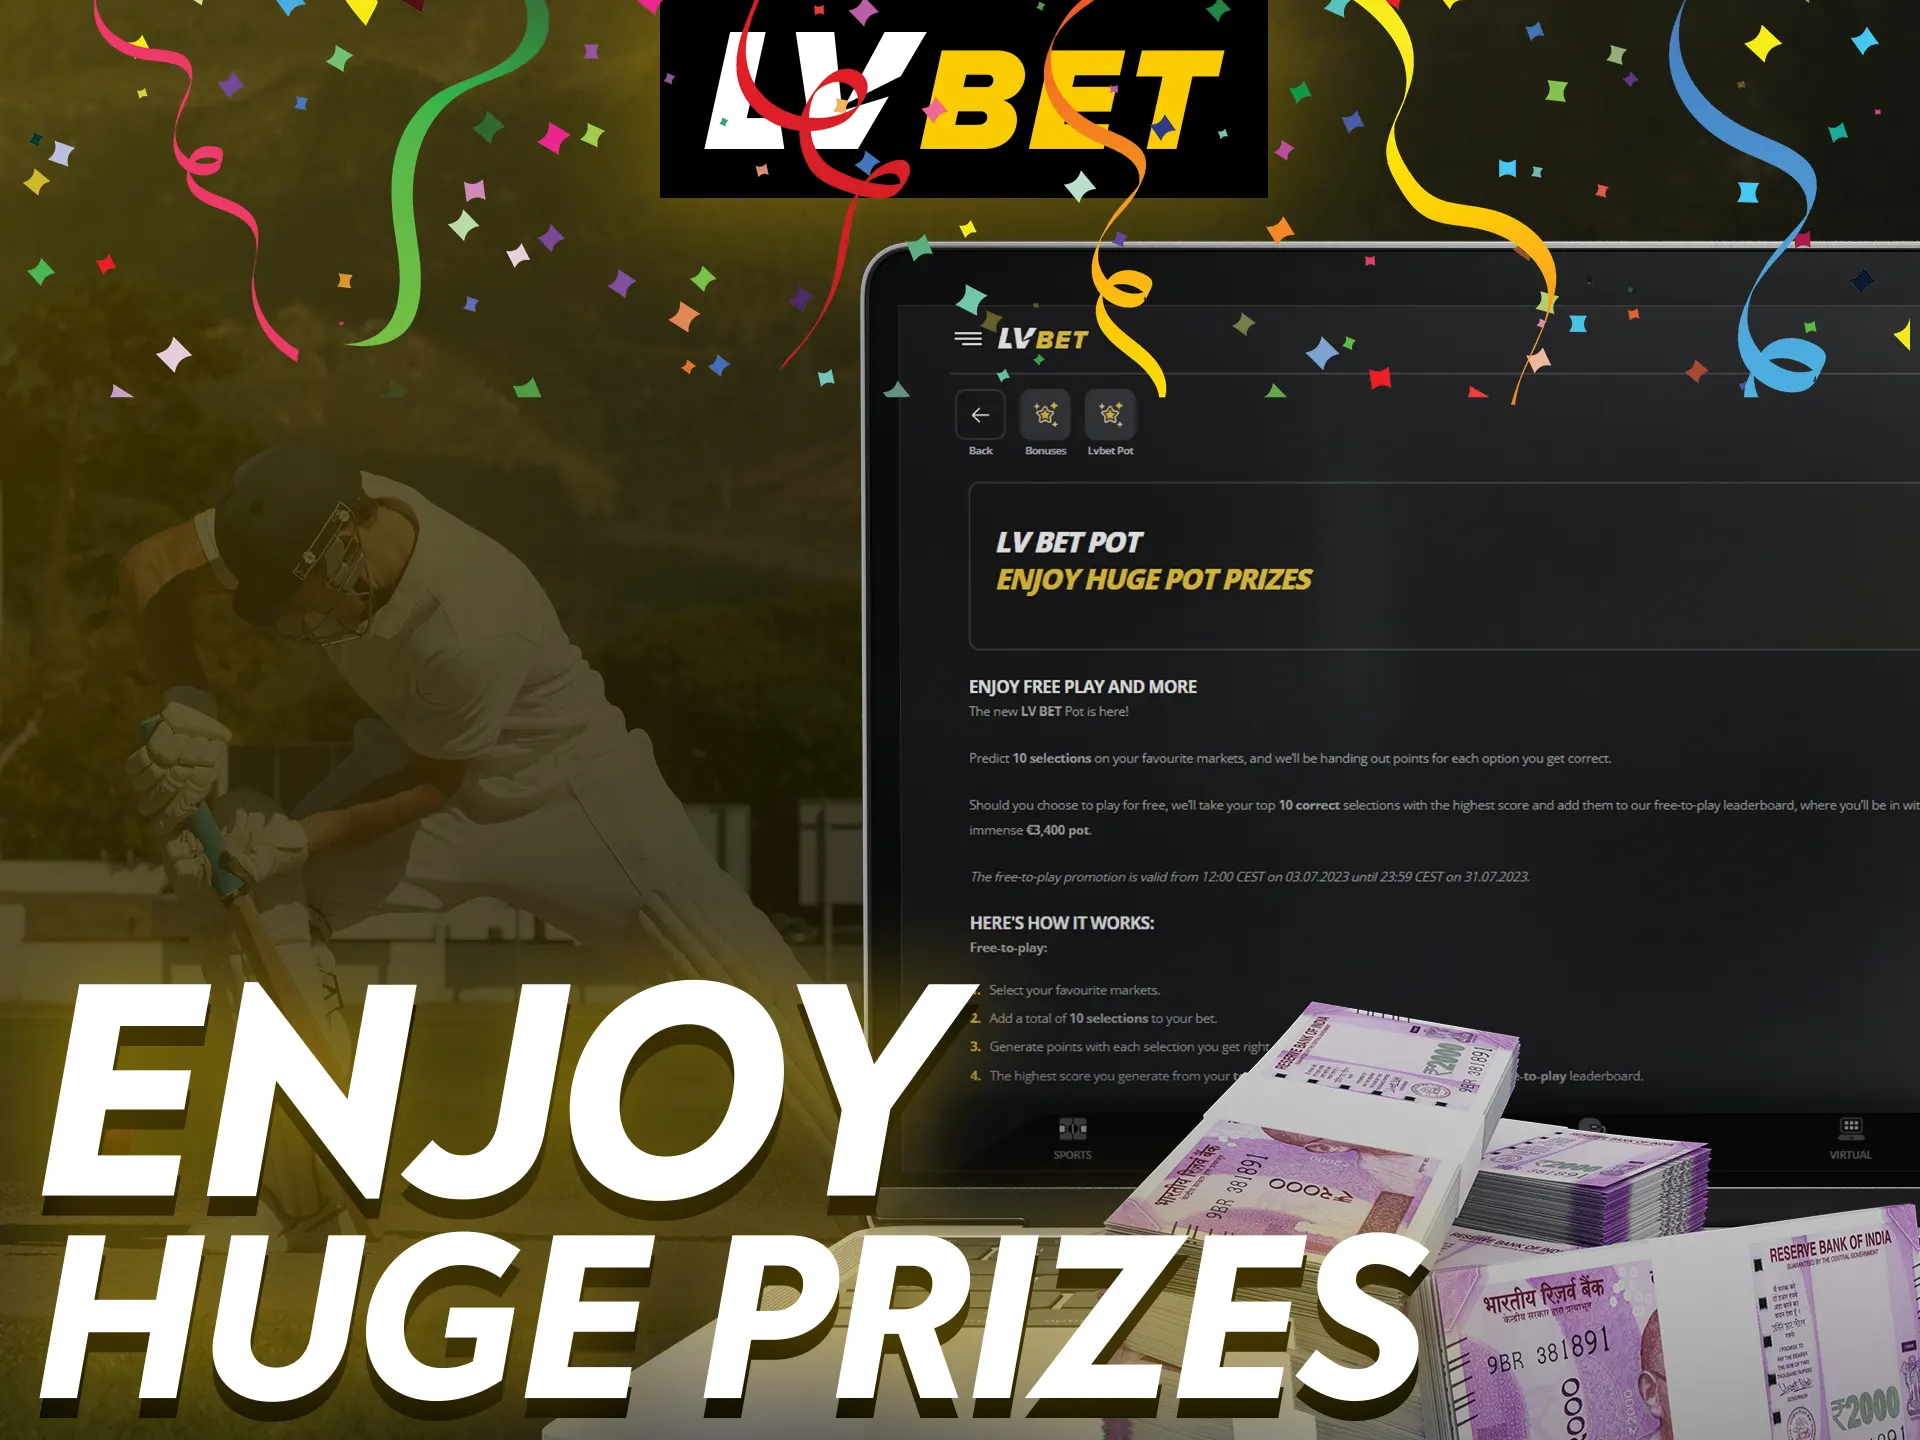 With LV Bet, enjoy huge prizes.